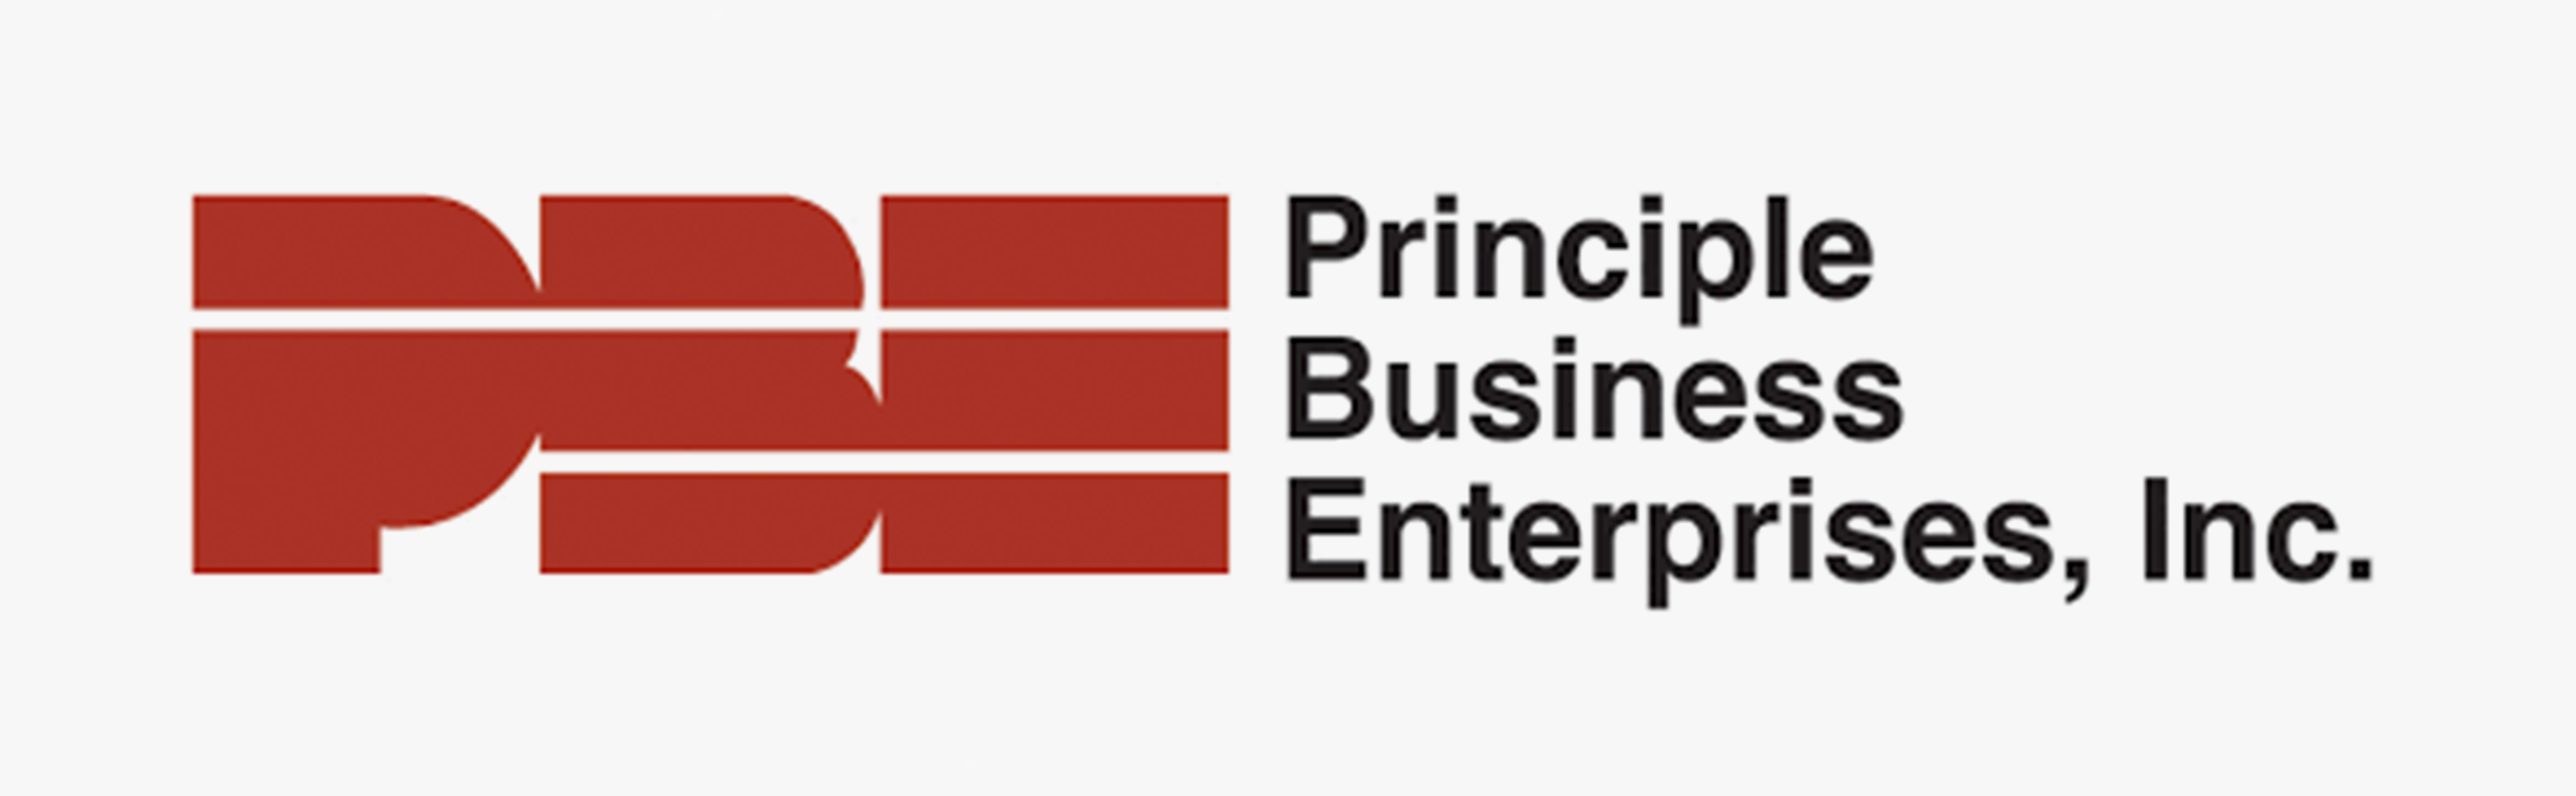 Principle Business Enterprises/Footwear&WoundCare